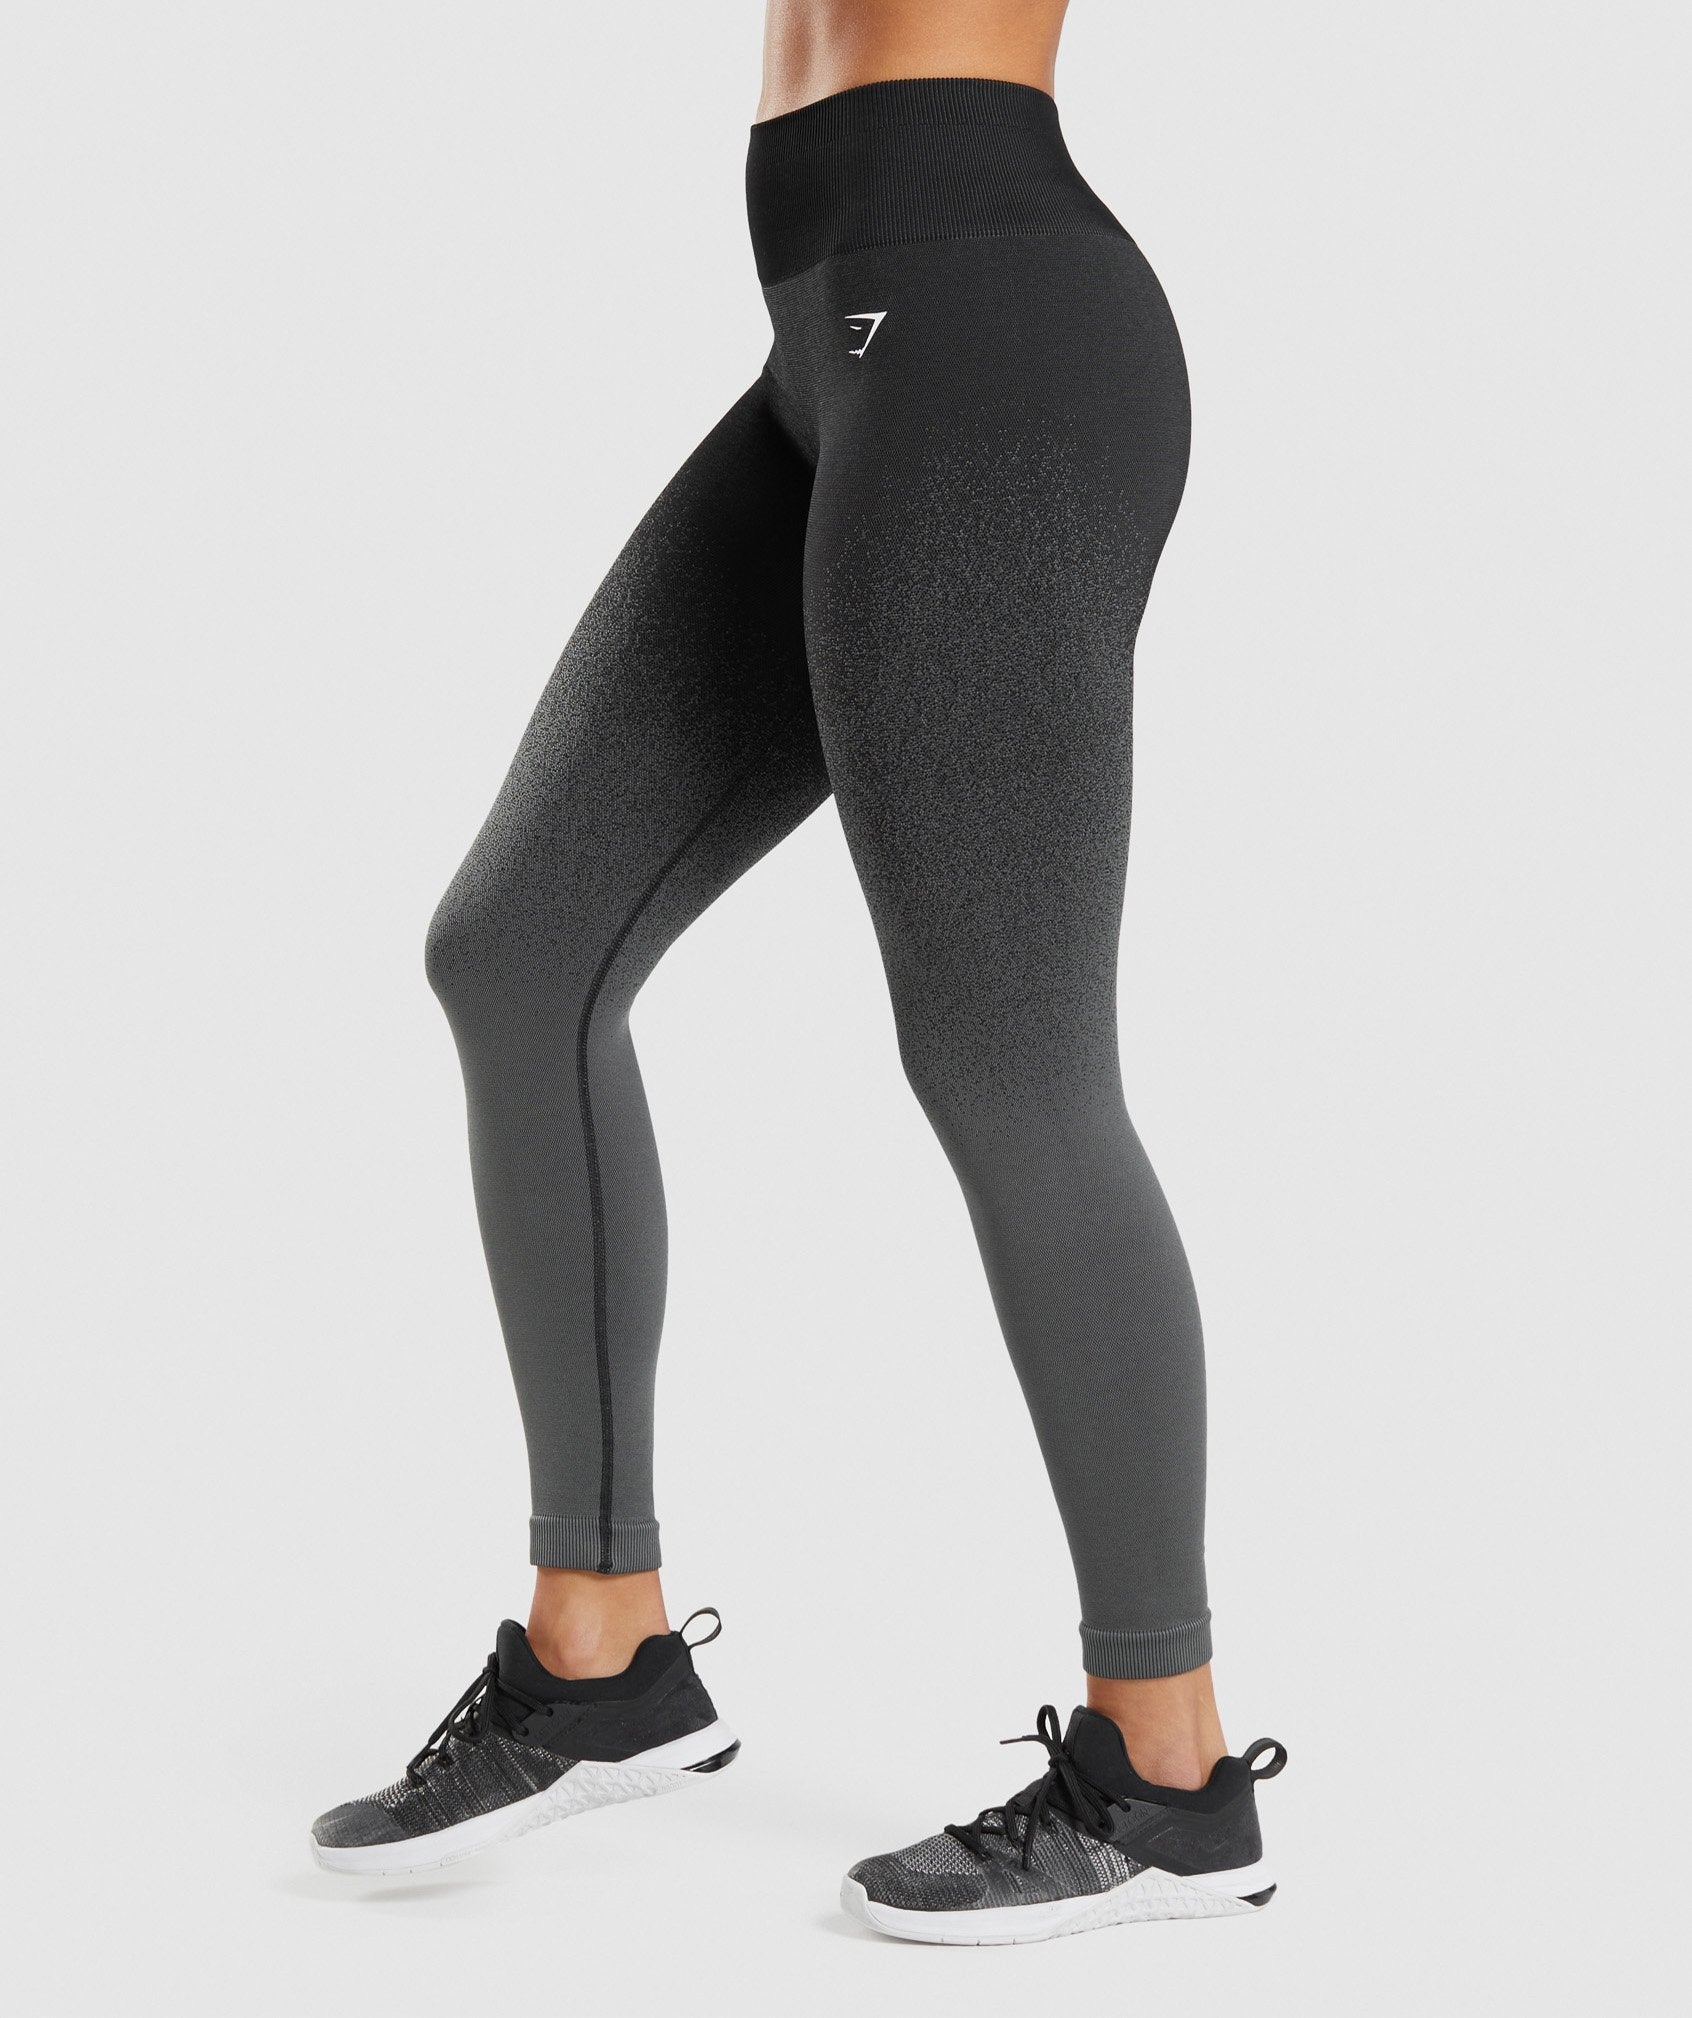 Adapt Ombre Seamless Leggings in Black/Grey